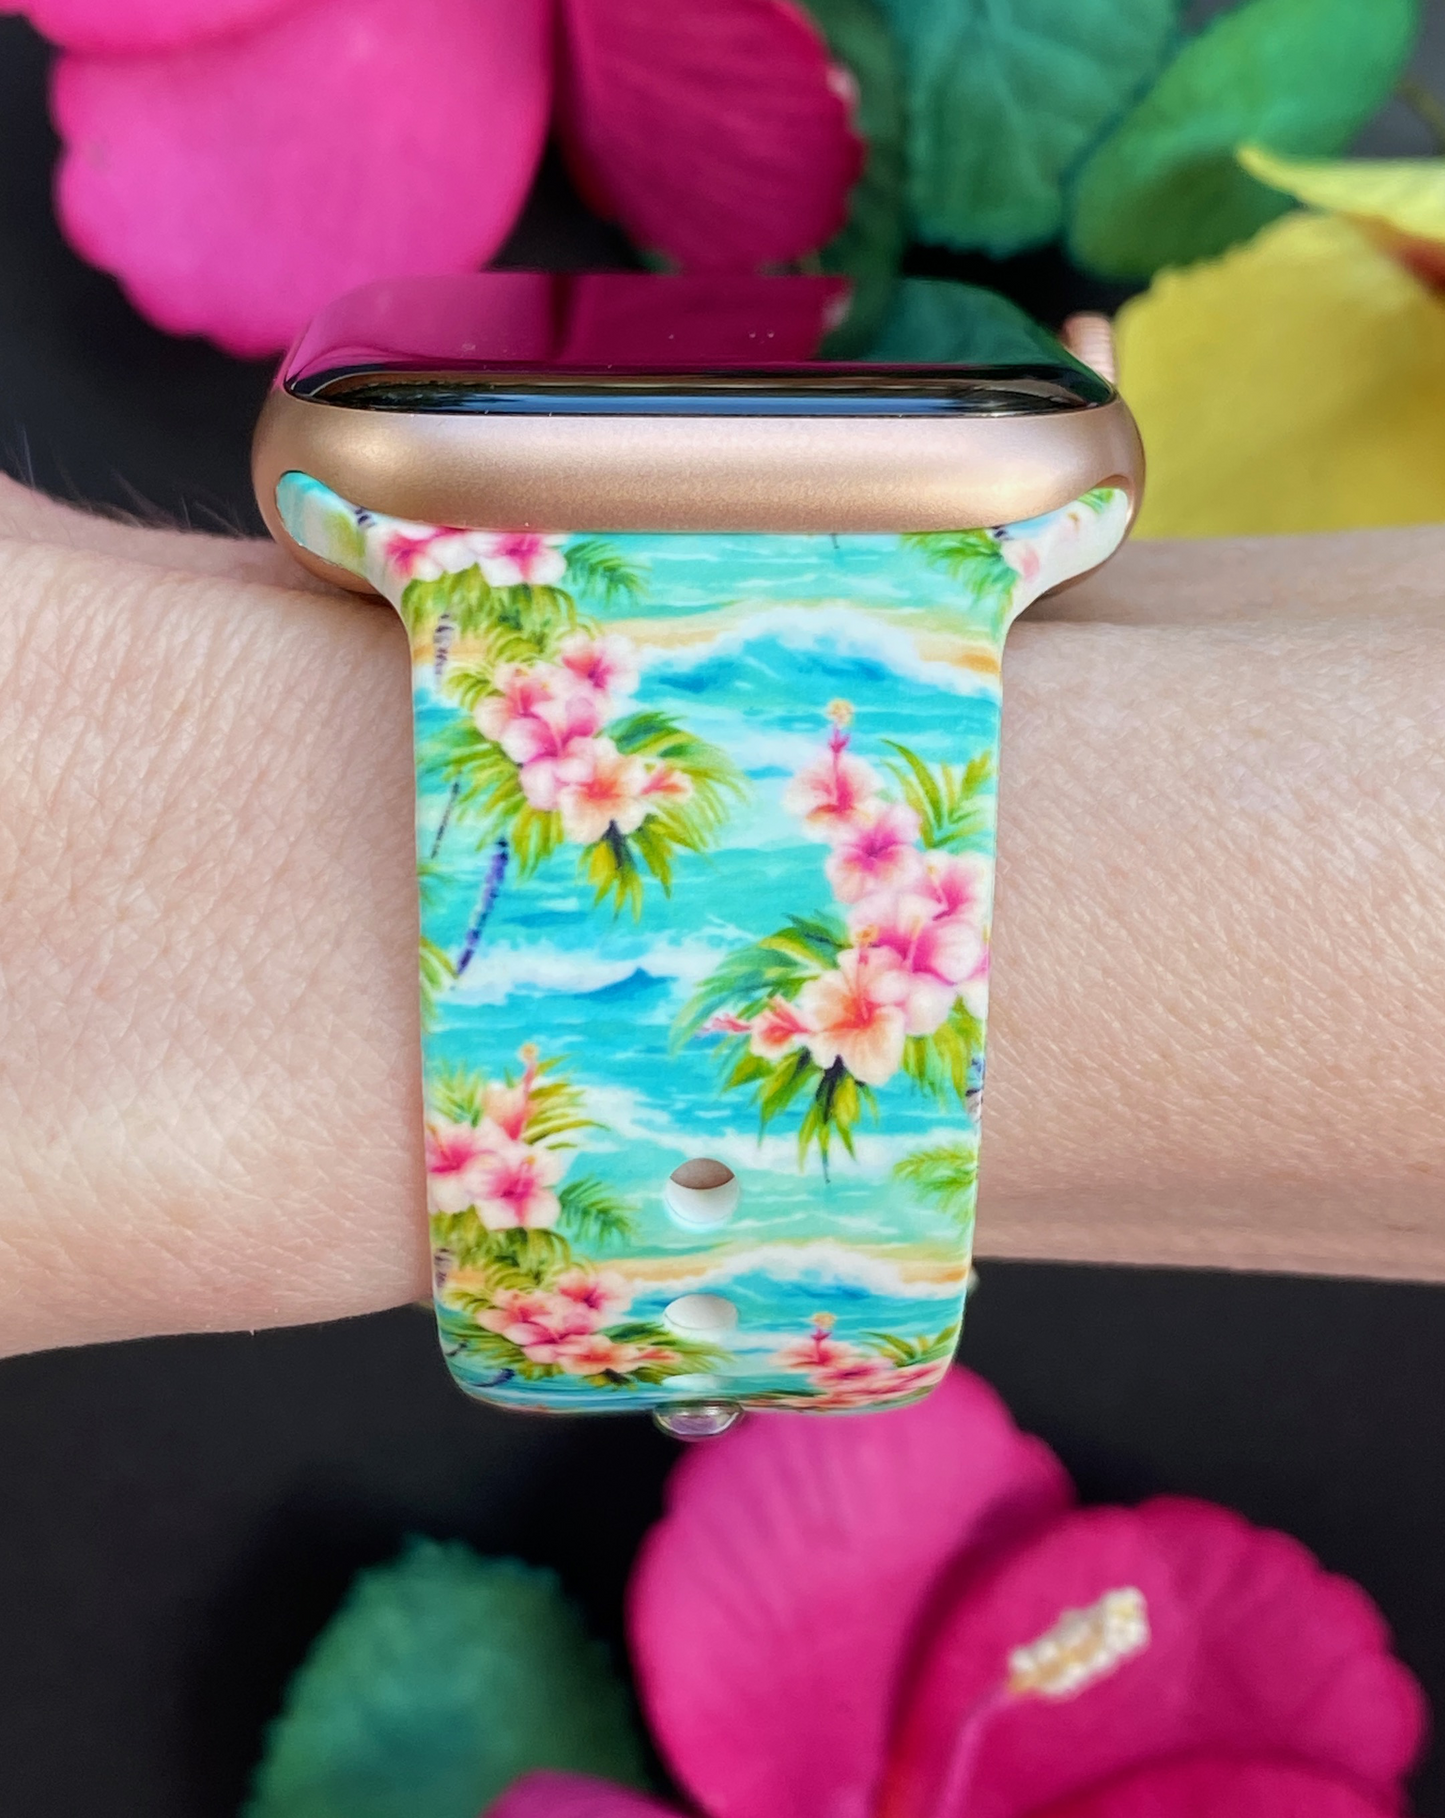 Tropical Ocean Apple Watch Band